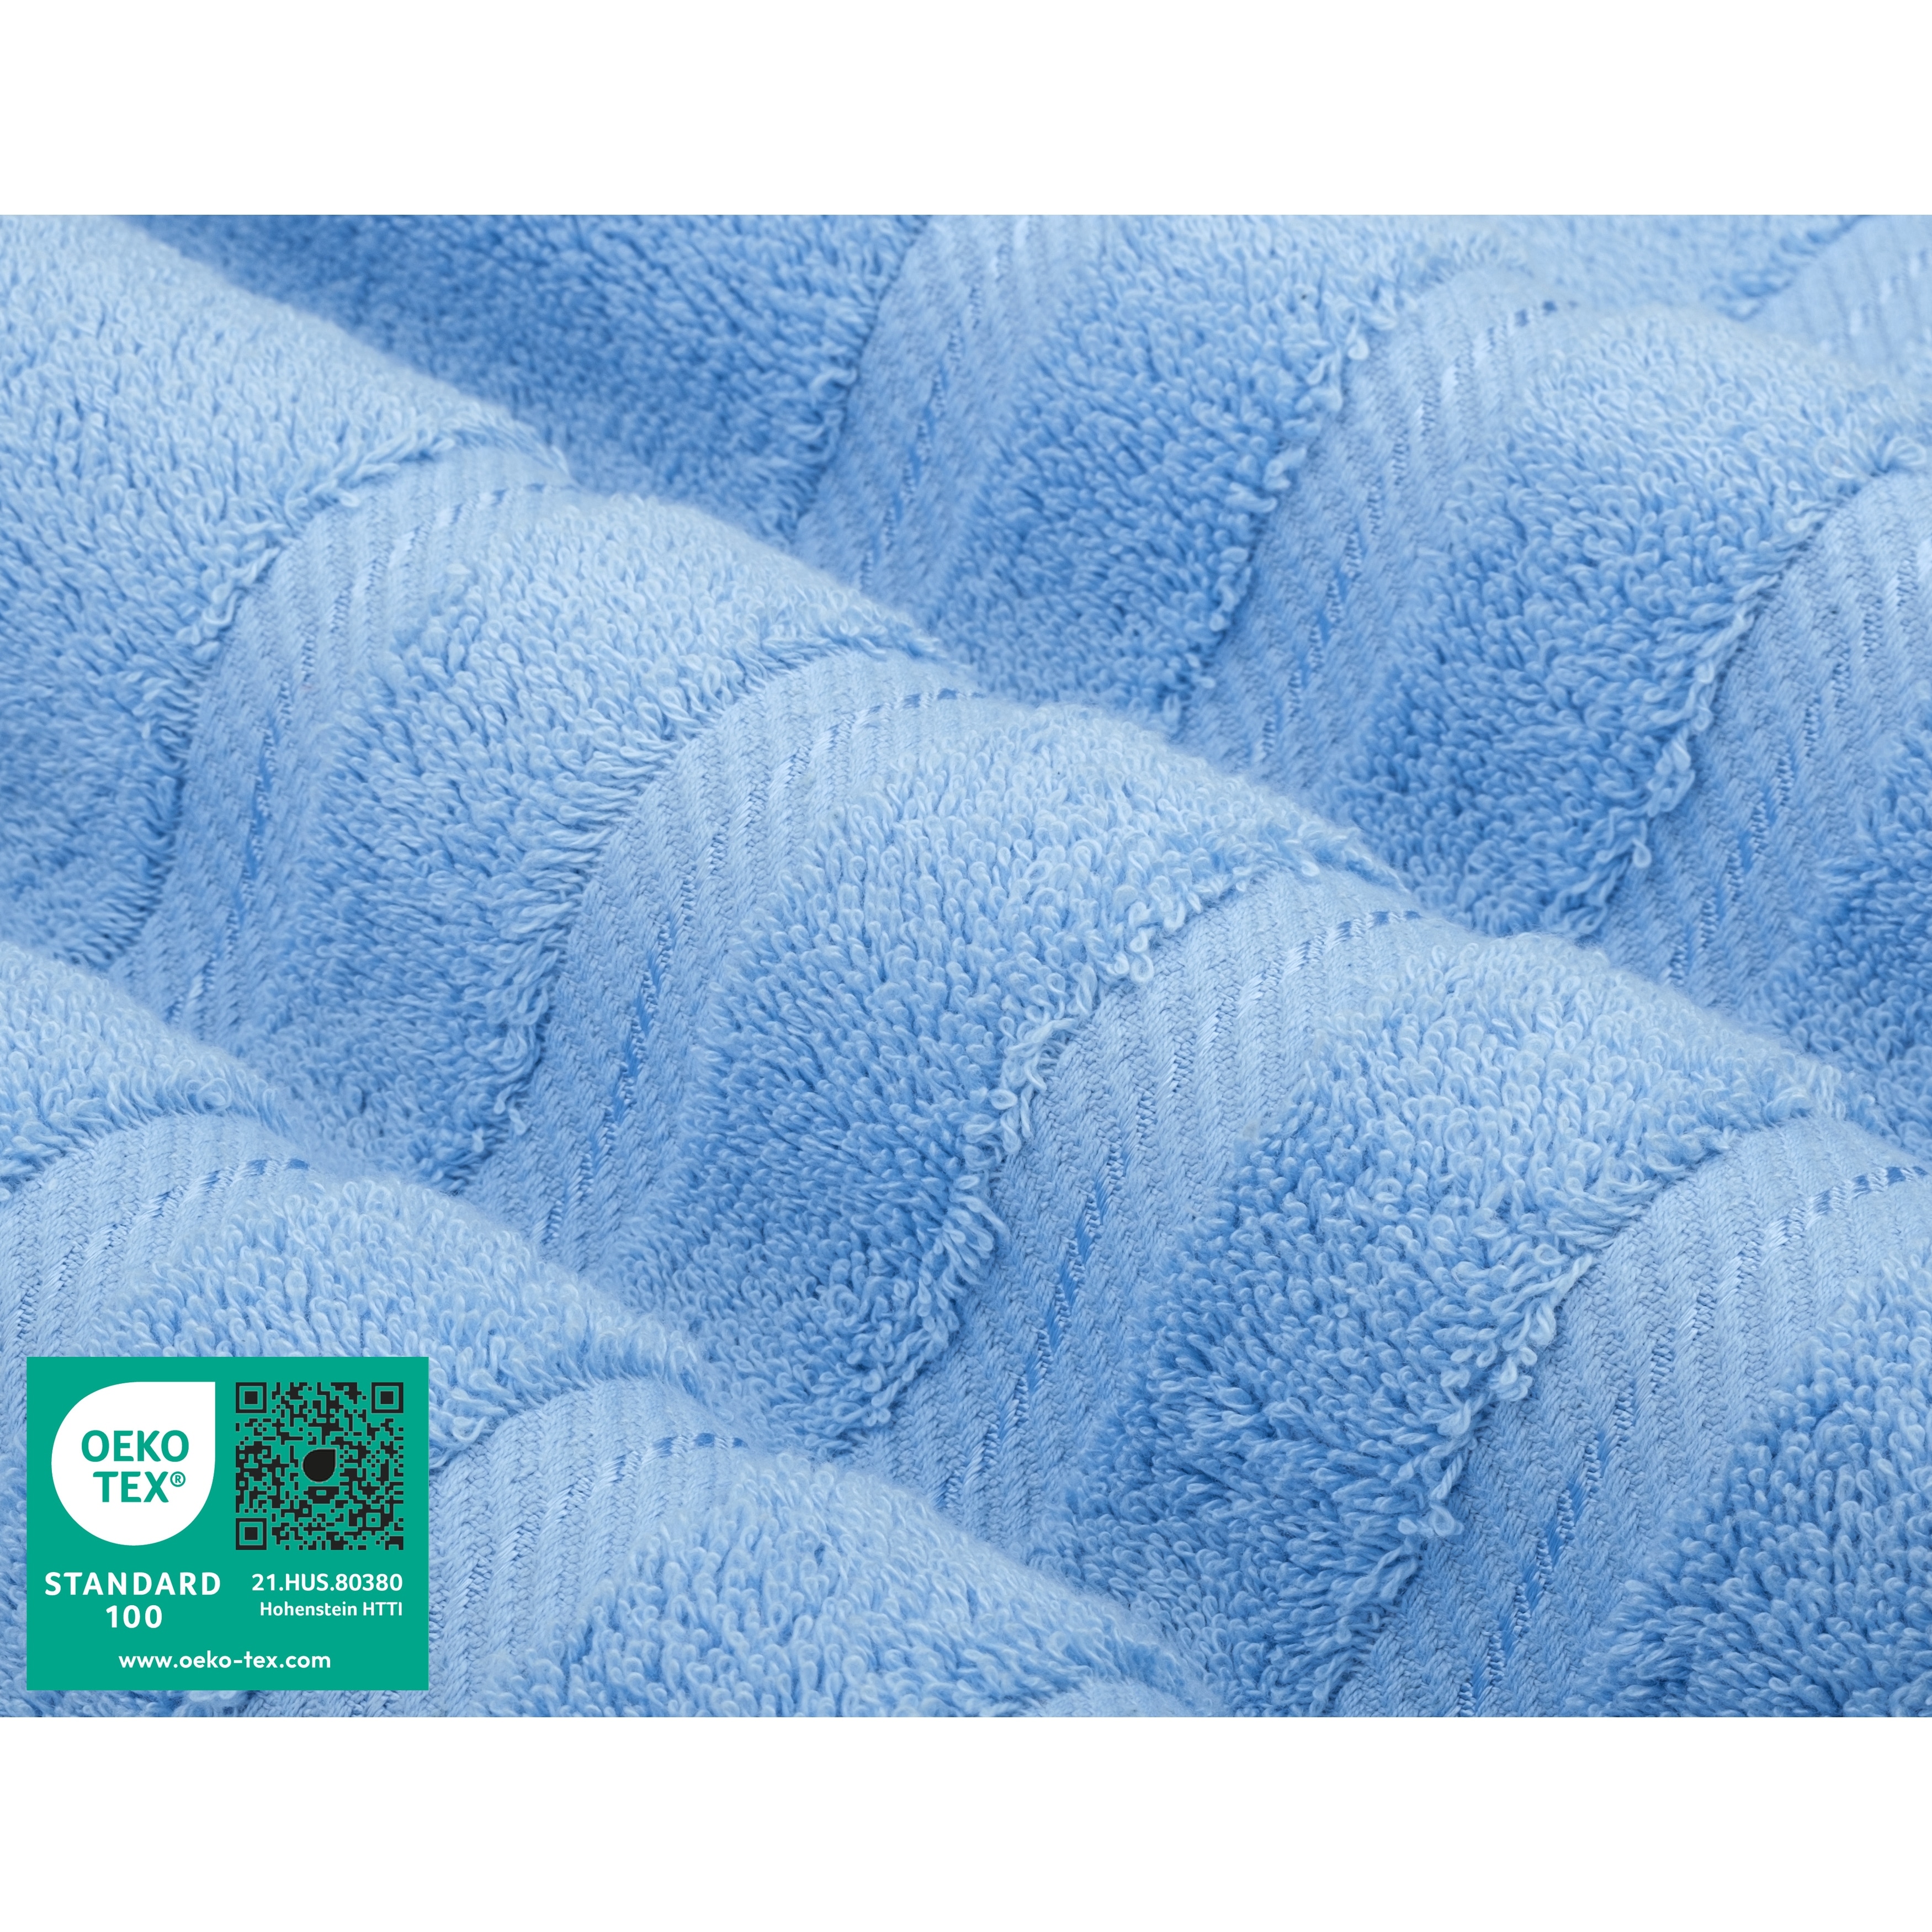 American Soft Linen Bath Towel Set, 4 Piece 100% Turkish Cotton Bath Towels,  27x54 inches Super Soft Towels for Bathroom, Turquoise Blue  Edis4BathPurpleE135 - The Home Depot